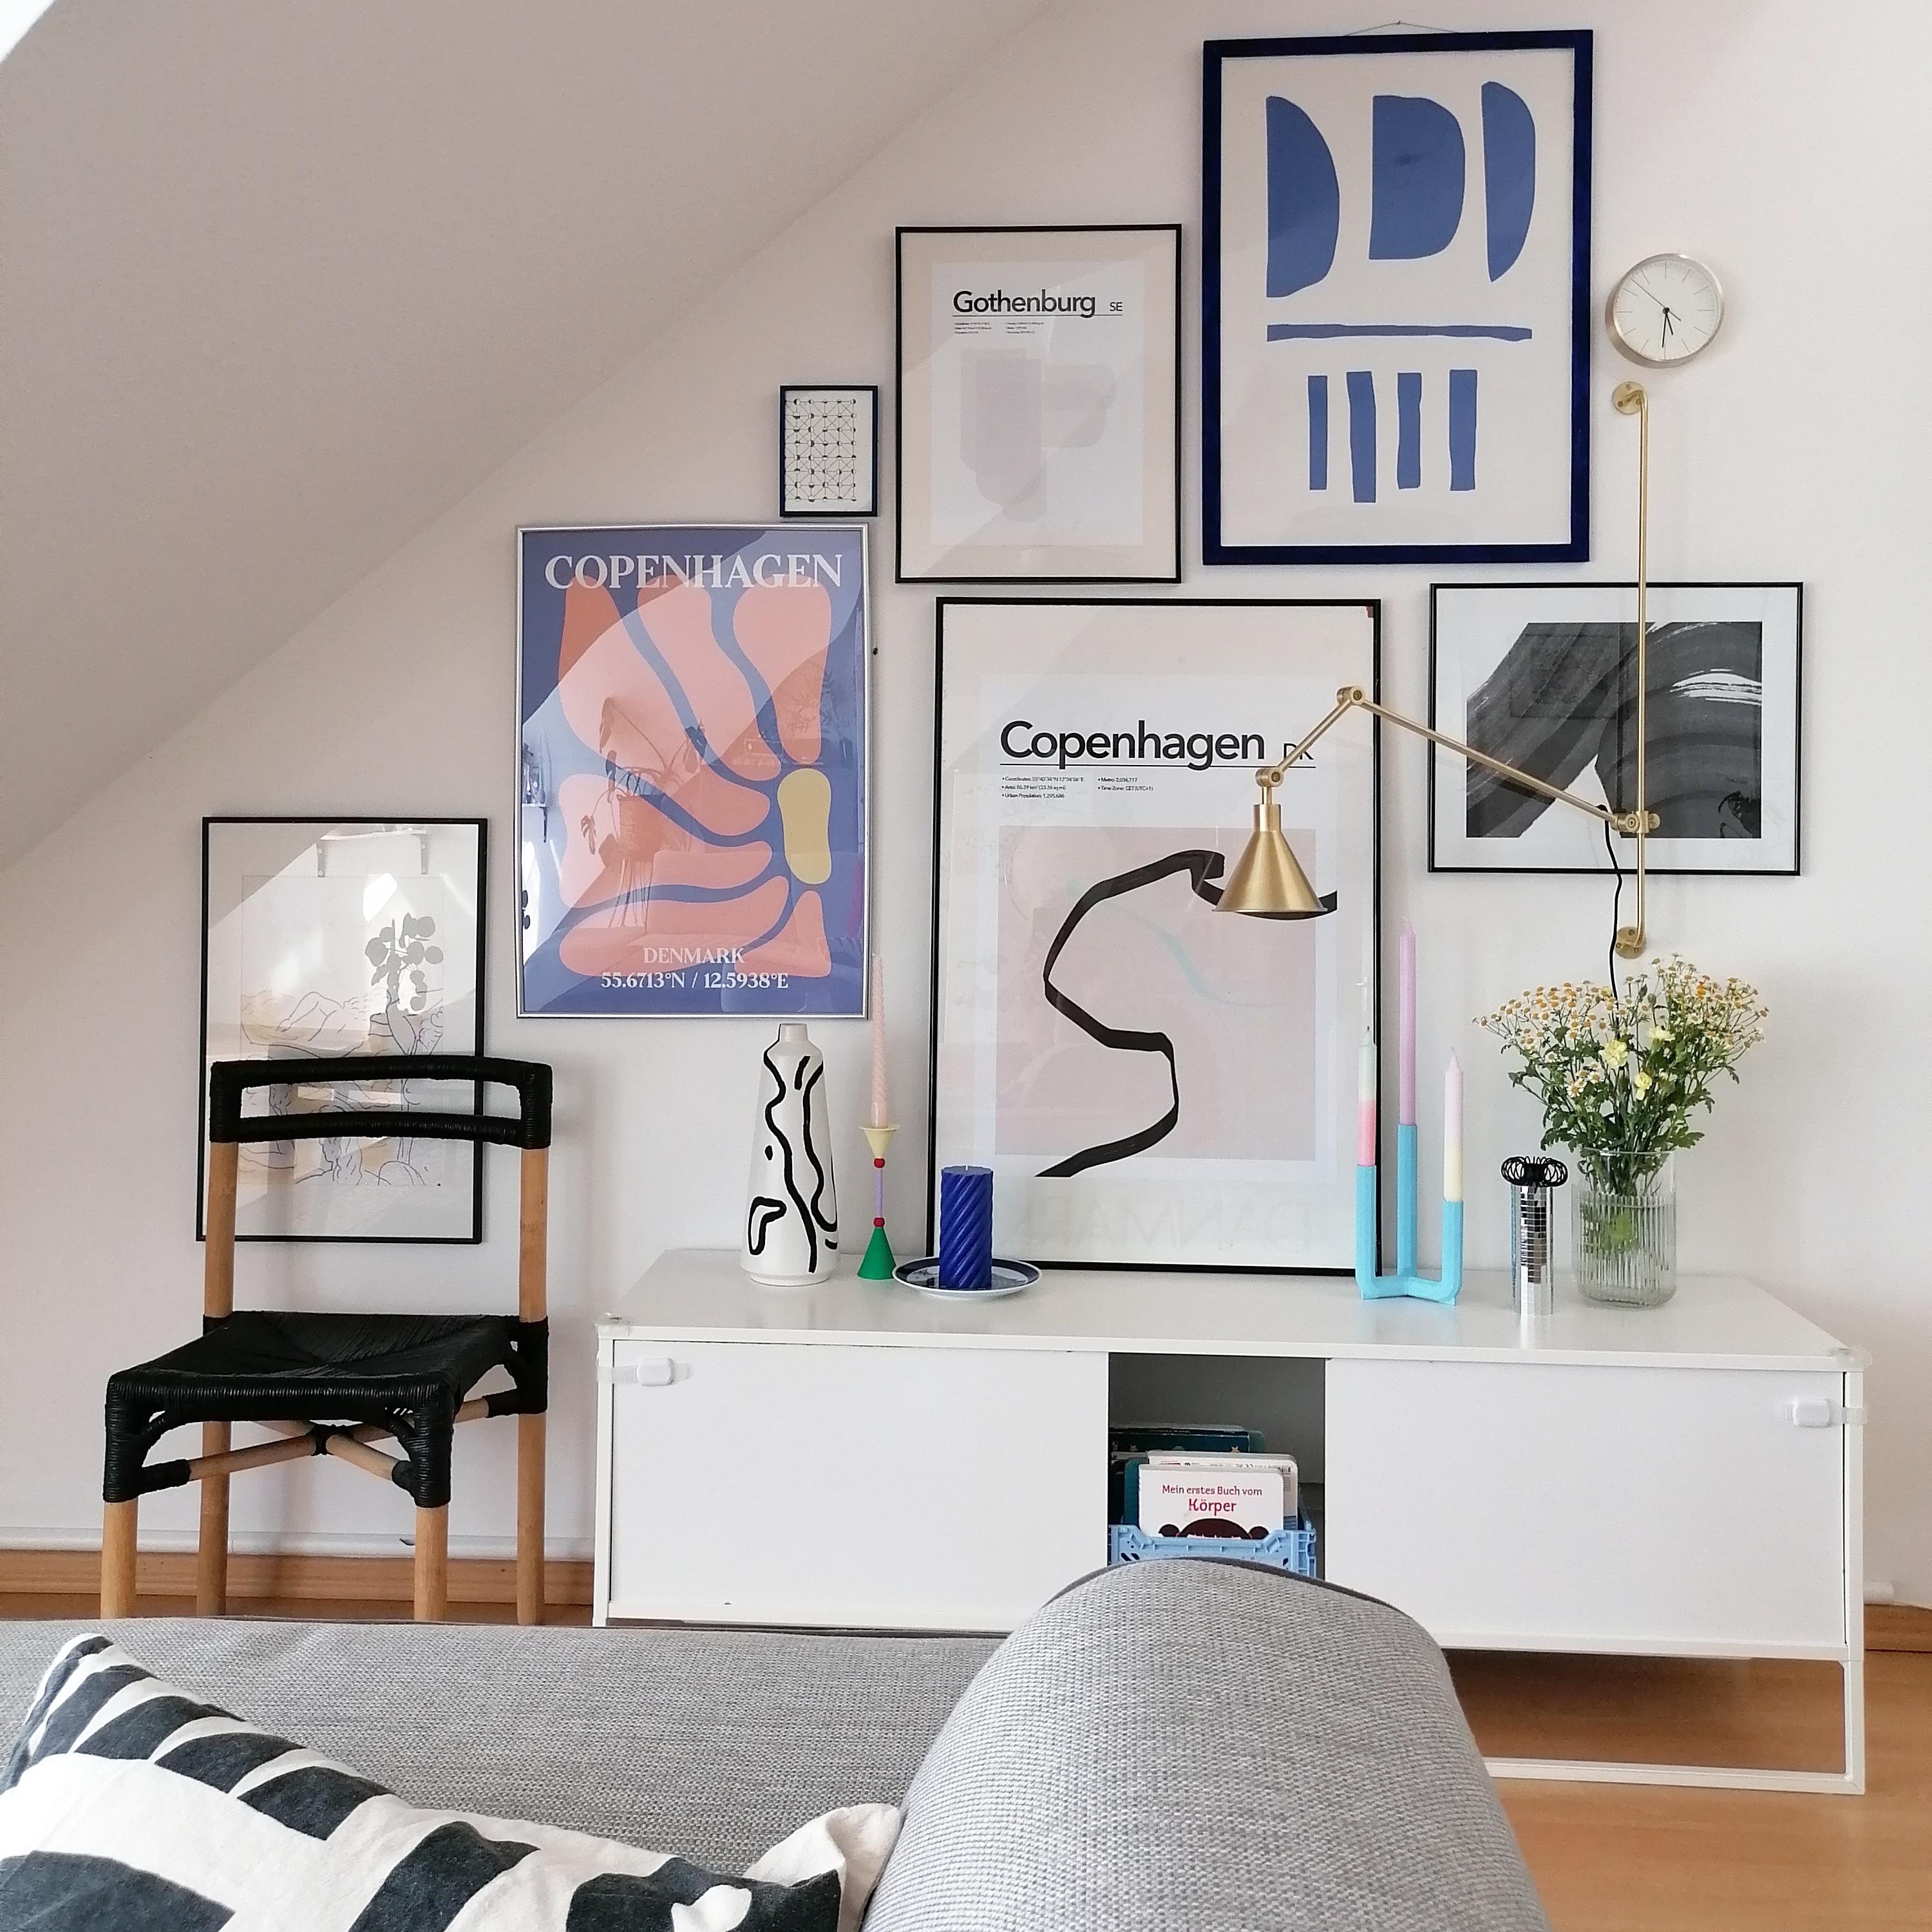 #walldecoration #wandgestaltung #livingroom #wohnzimmer #couchstyle #colourfulinterior #wallofart #posterwall #sofa